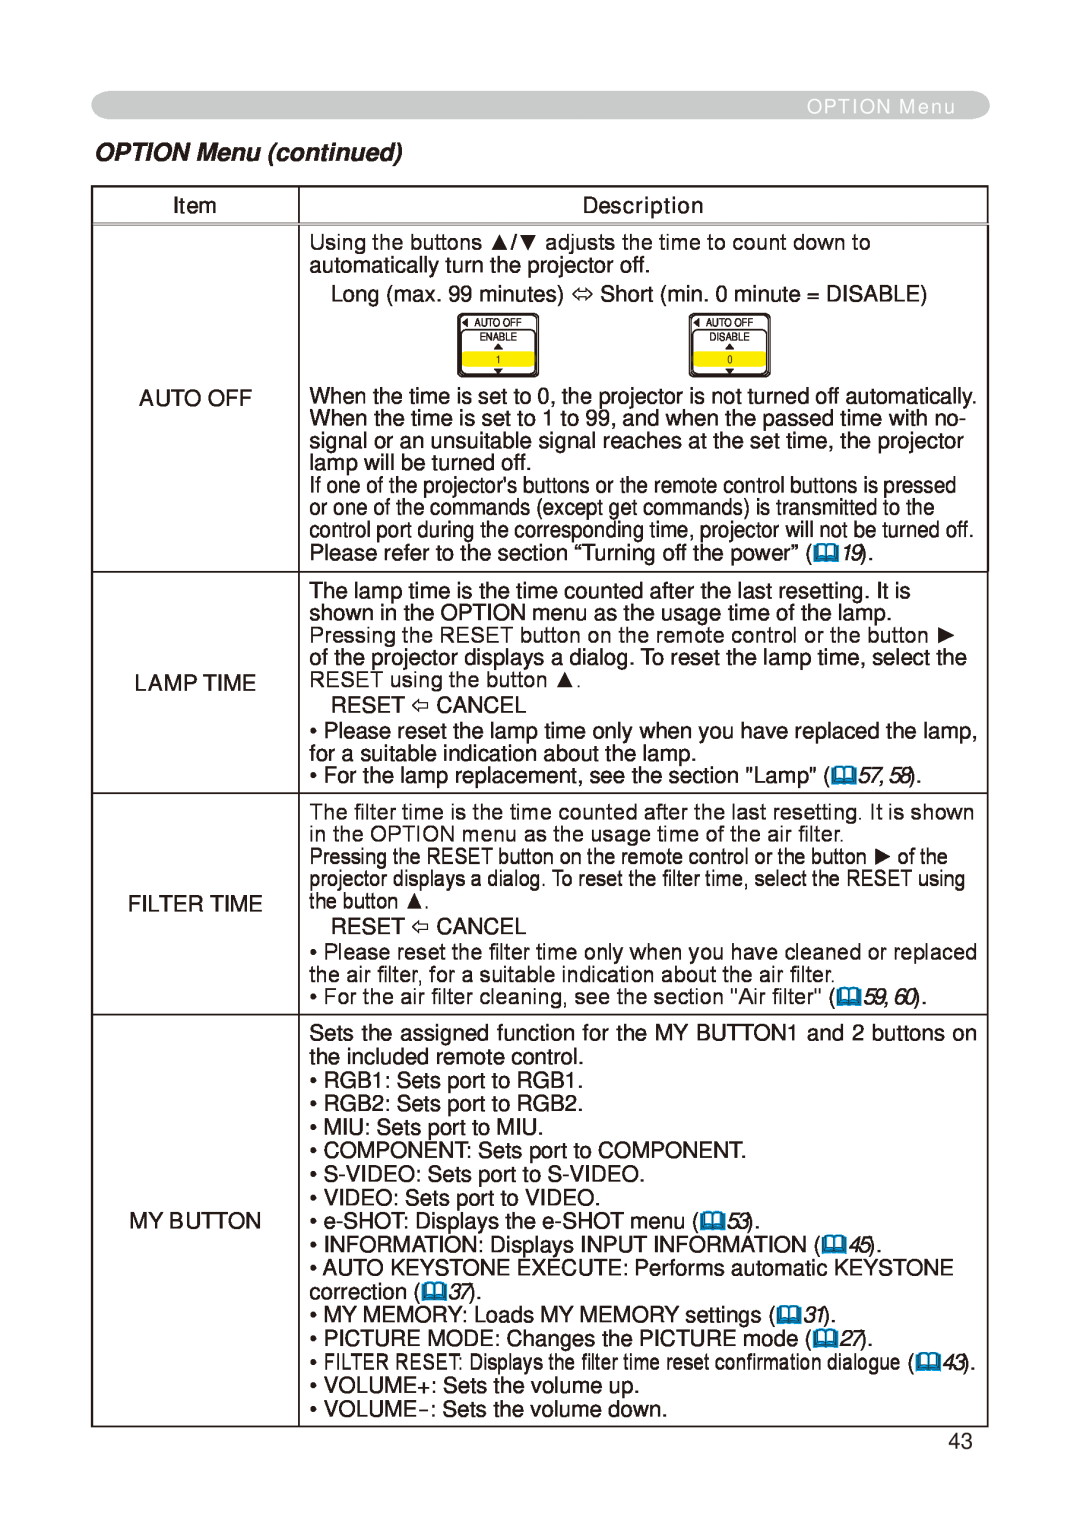 Hitachi CP-X268A user manual OPTION Menu continued, Description, Auto Off, Lamp Time, Filter Time, My Button 